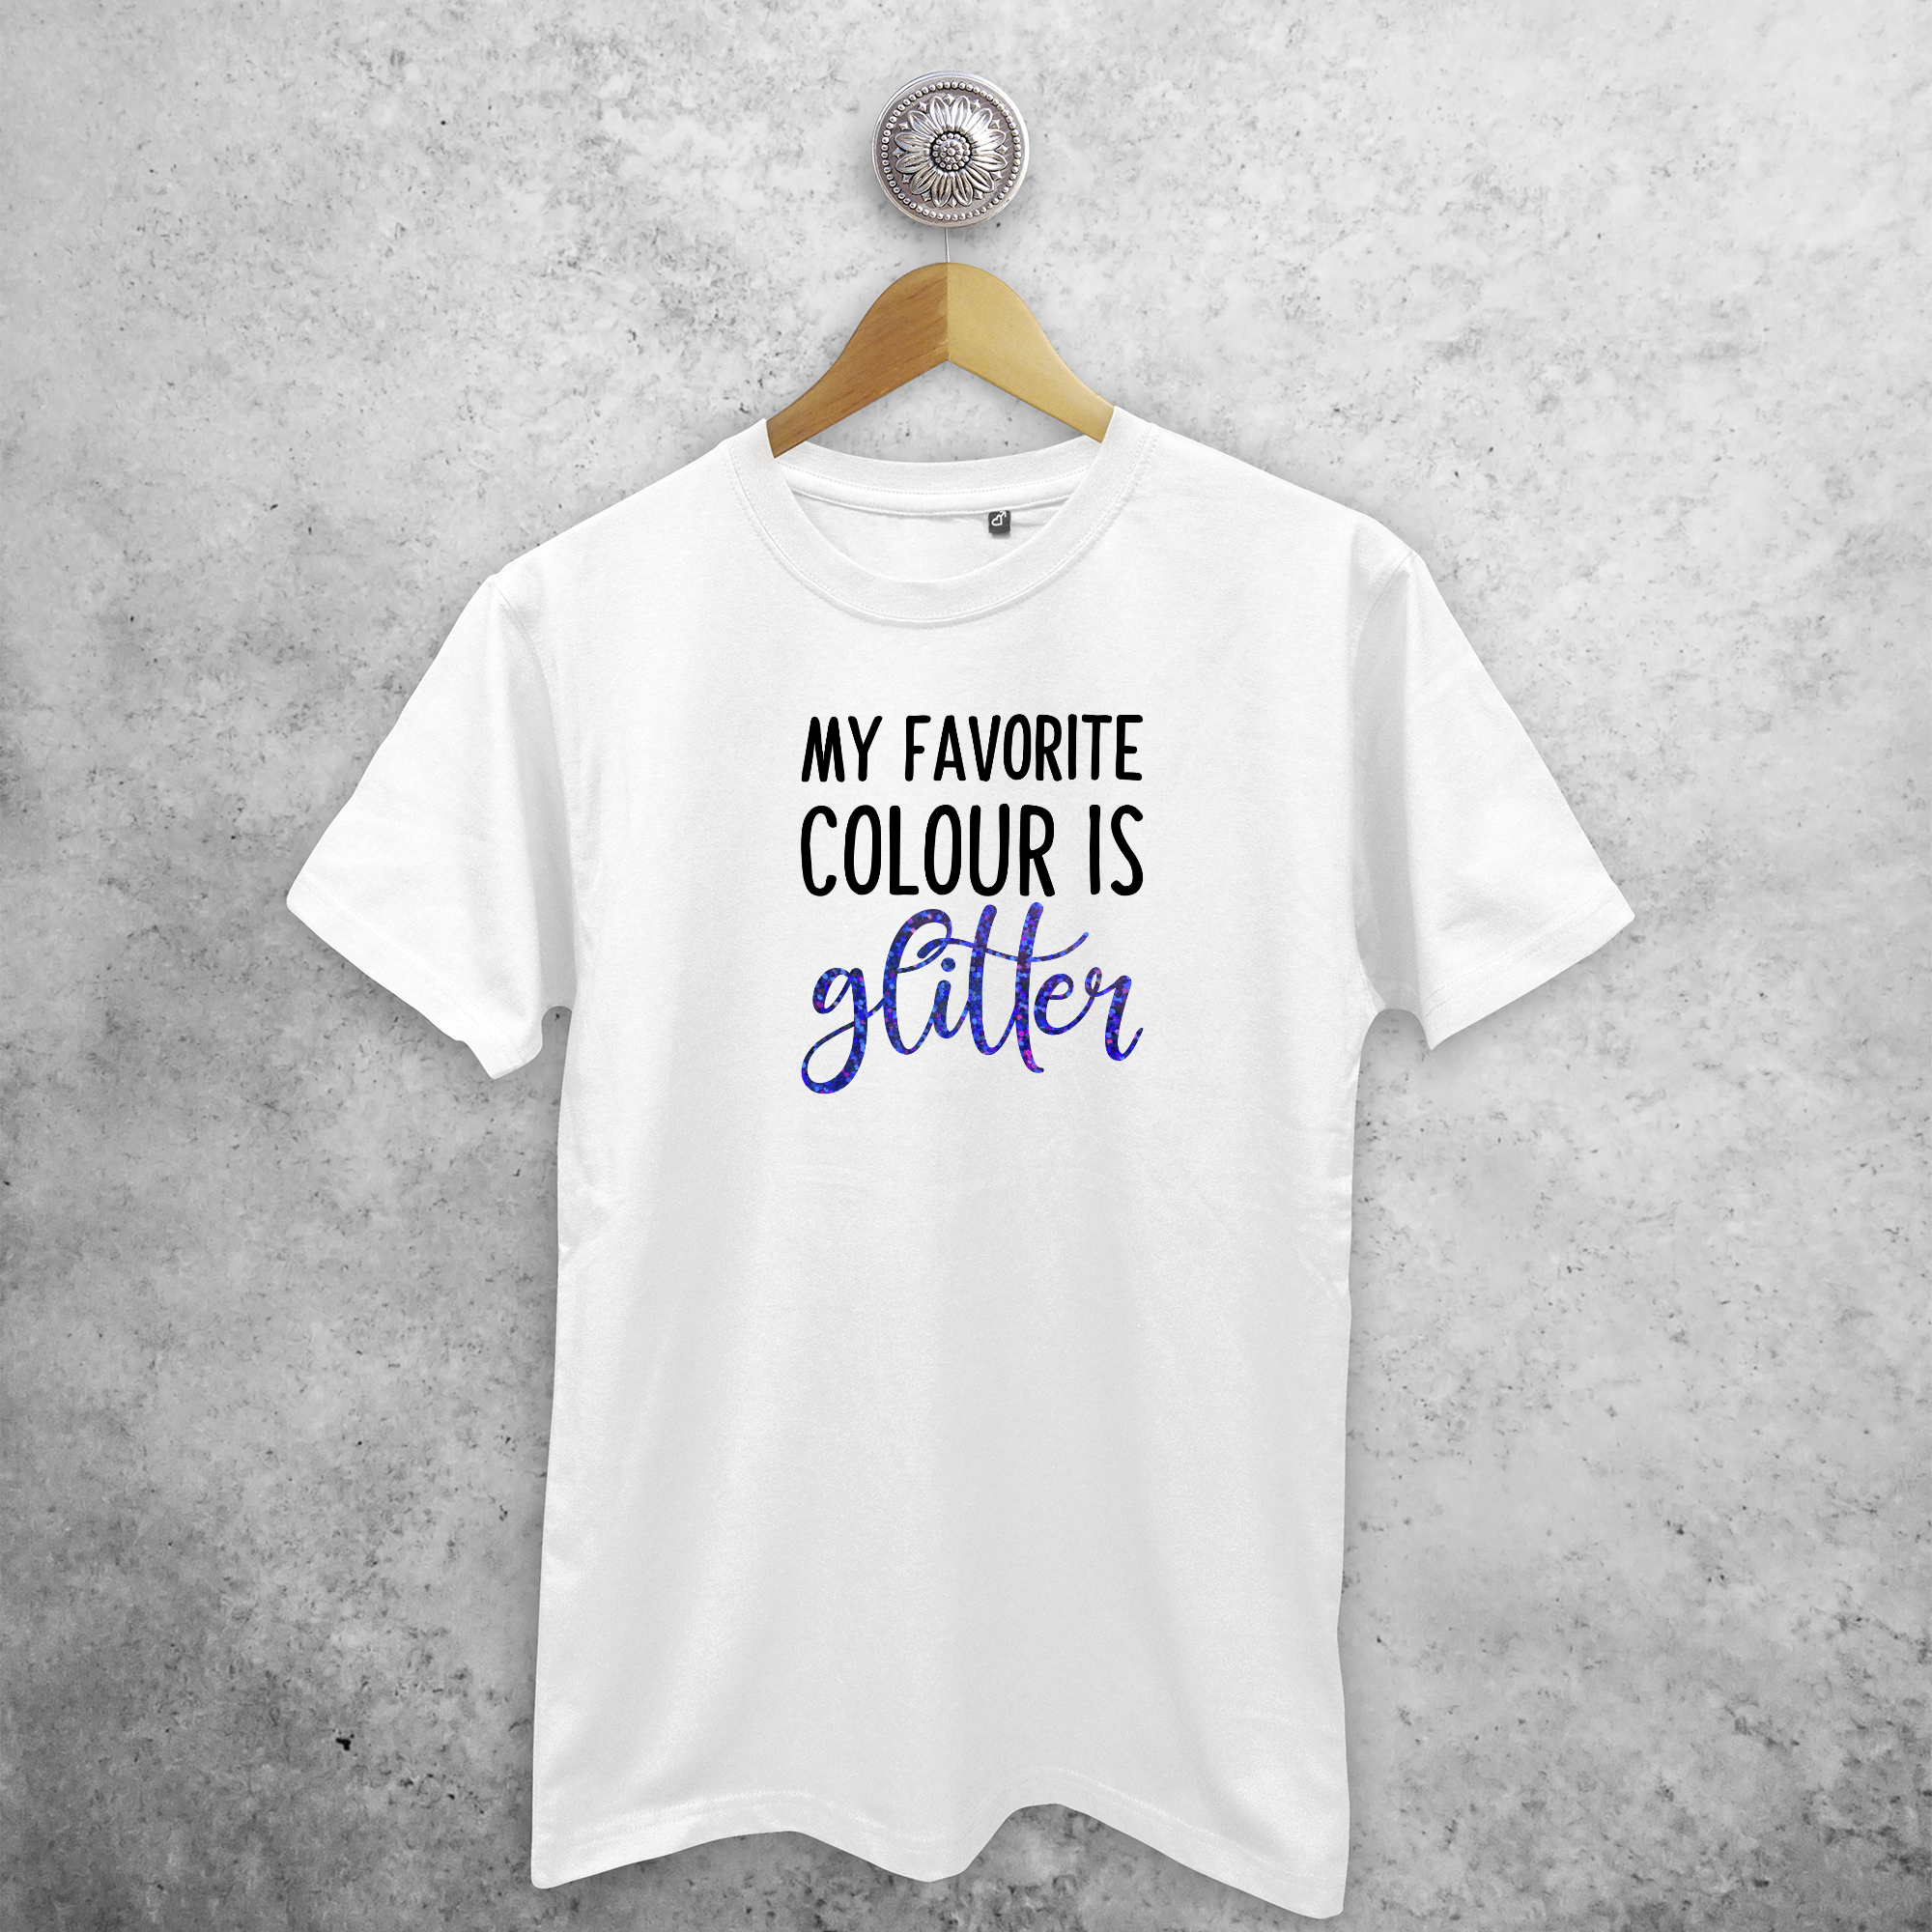 'My favorite colour is glitter' volwassene shirt